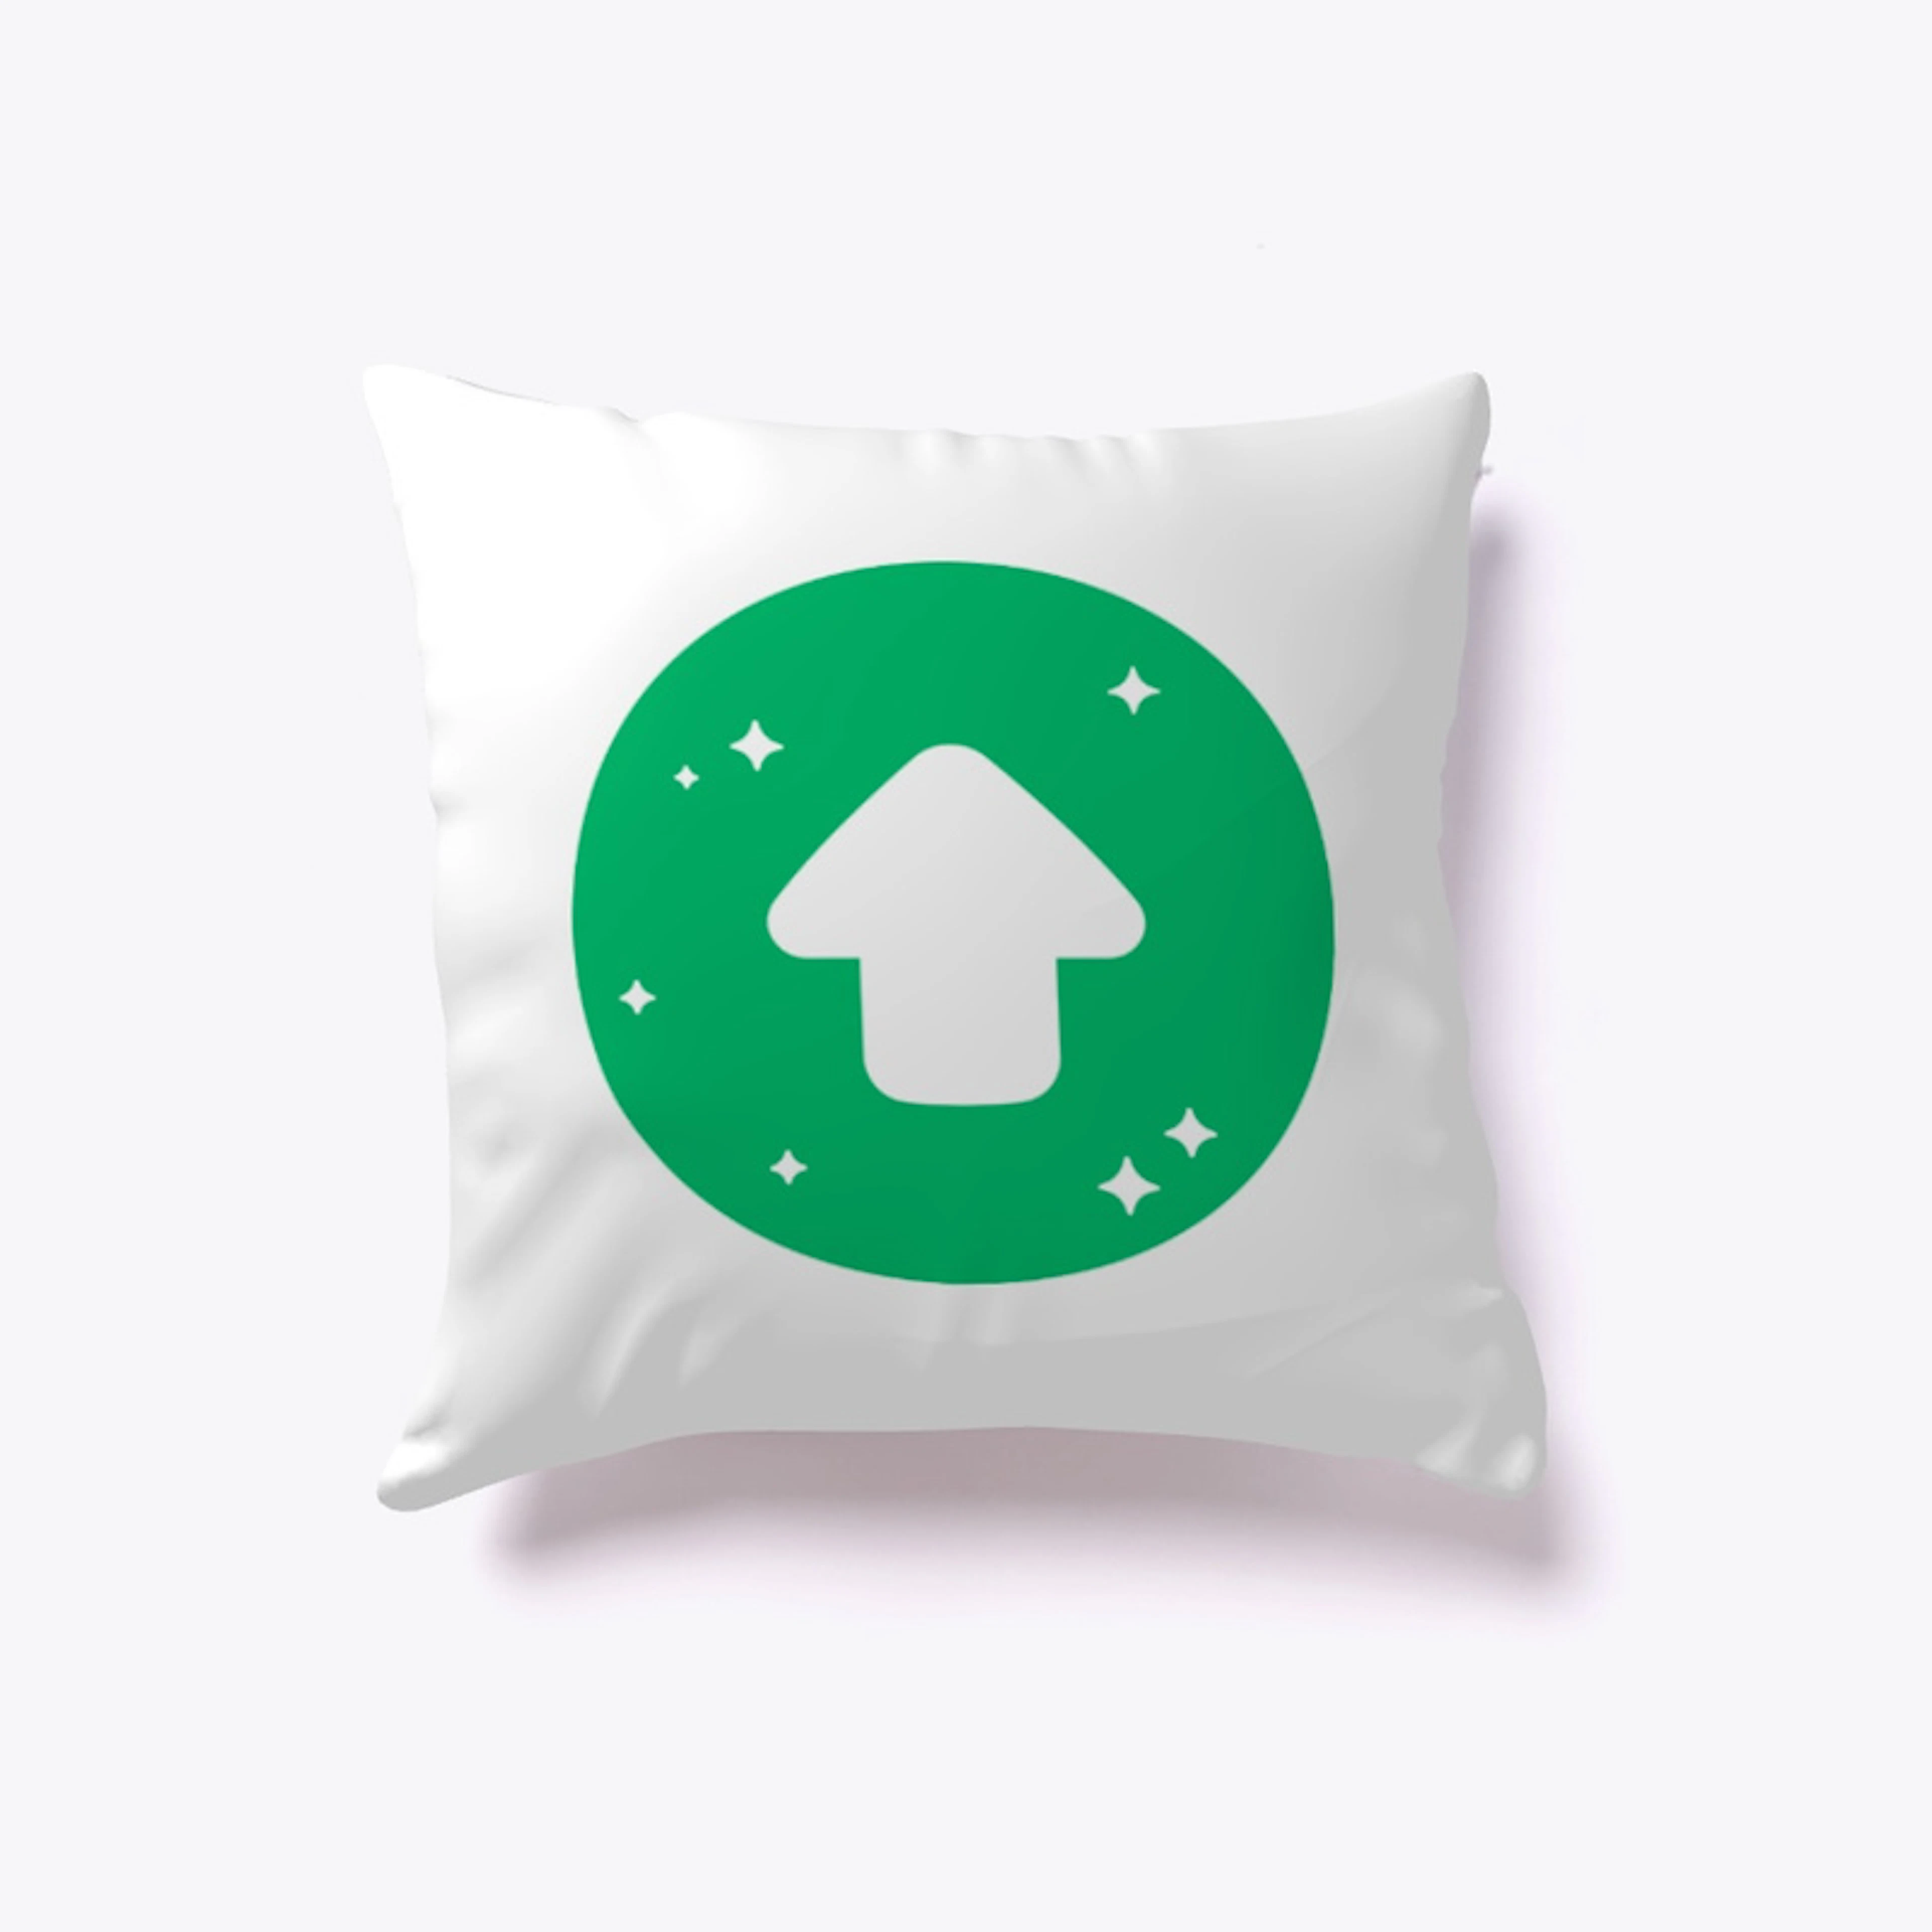 Upvote/Downvote Pillow